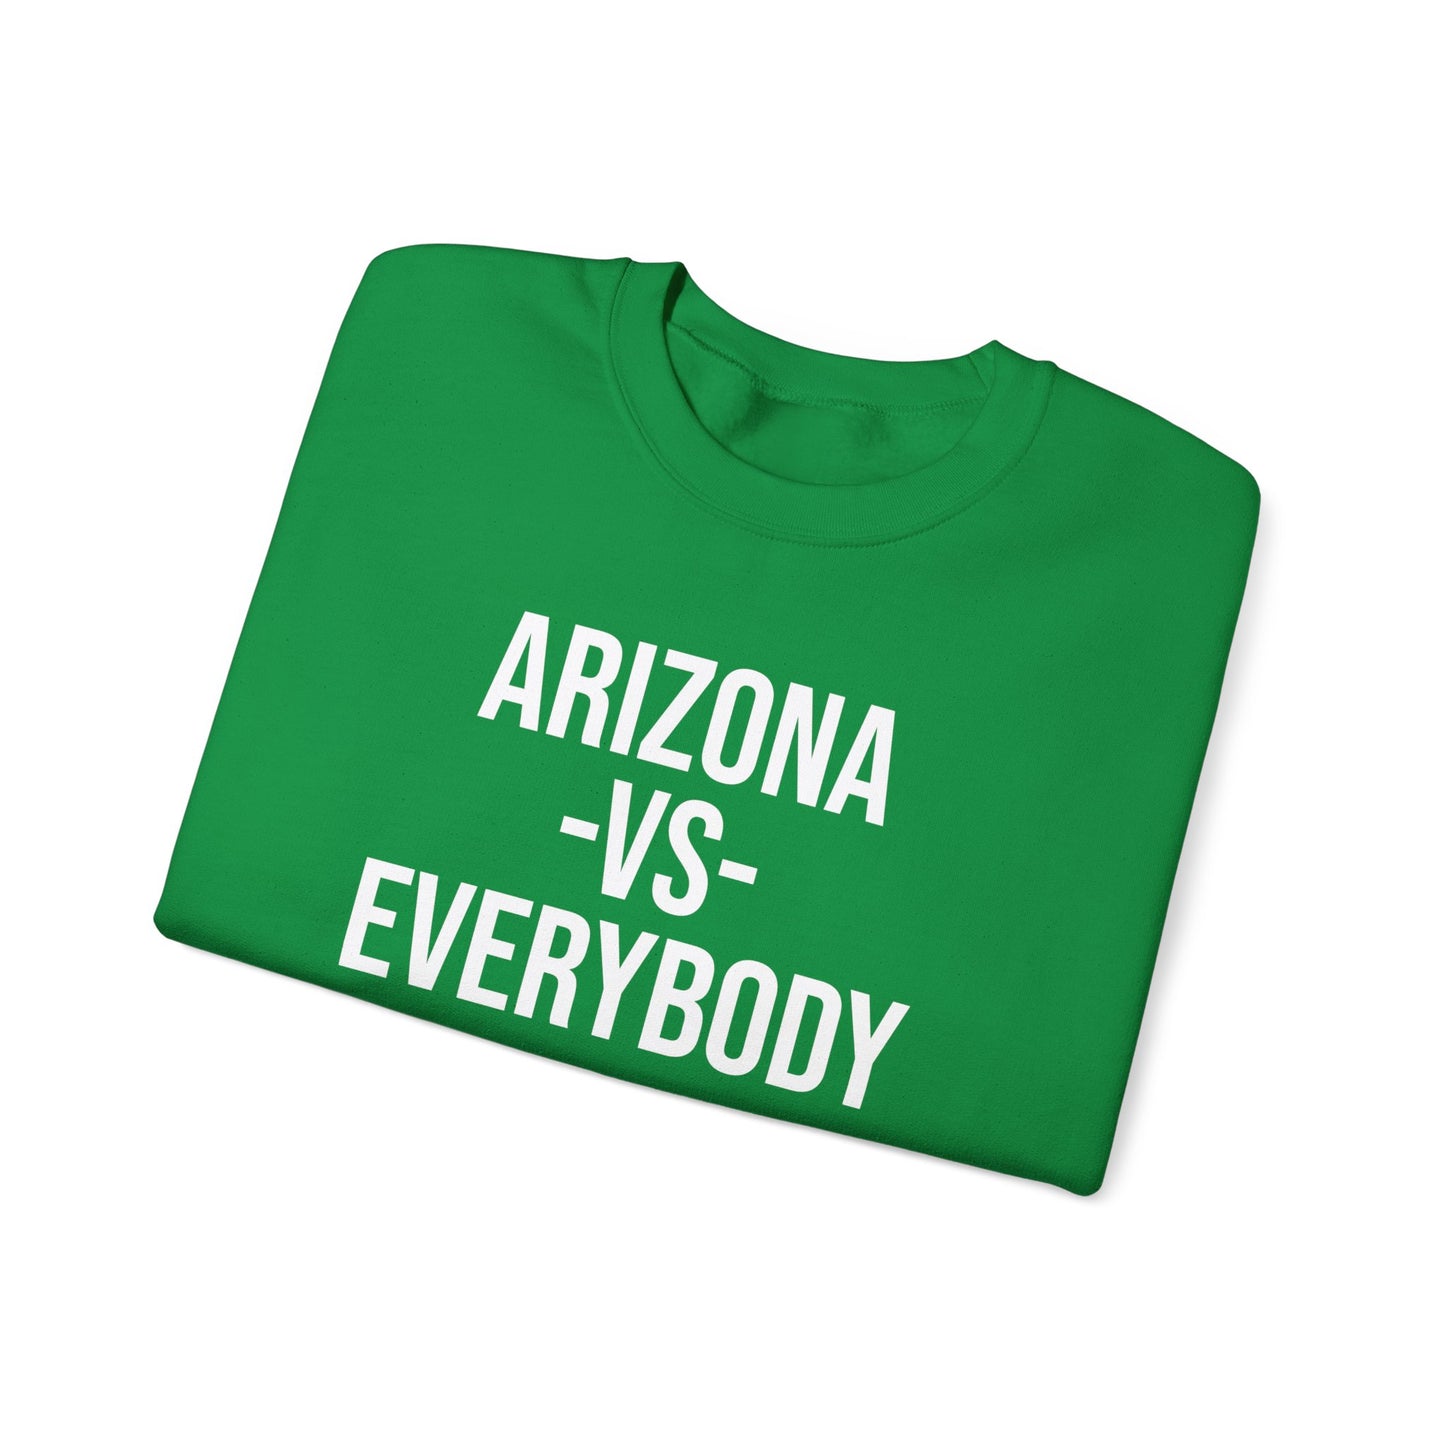 Arizona - VS - Everybody Unisex Heavy Blend™ Crewneck Sweatshirt